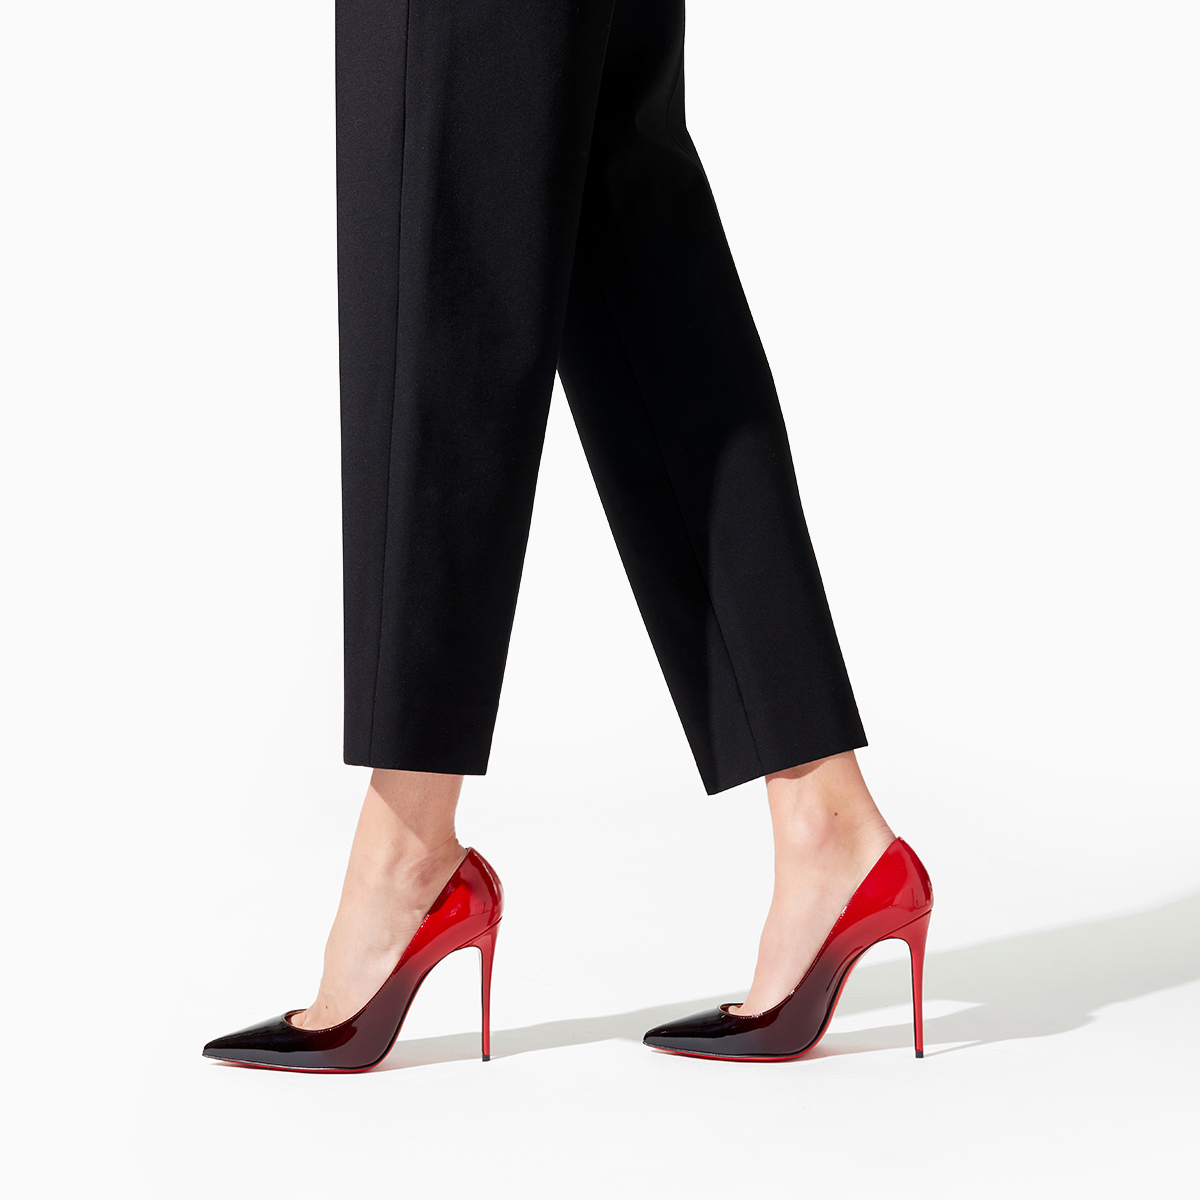 Women's High Heel Red Bottom Shoes Size 36.5 Christian Louboutin Black 160  Mesh